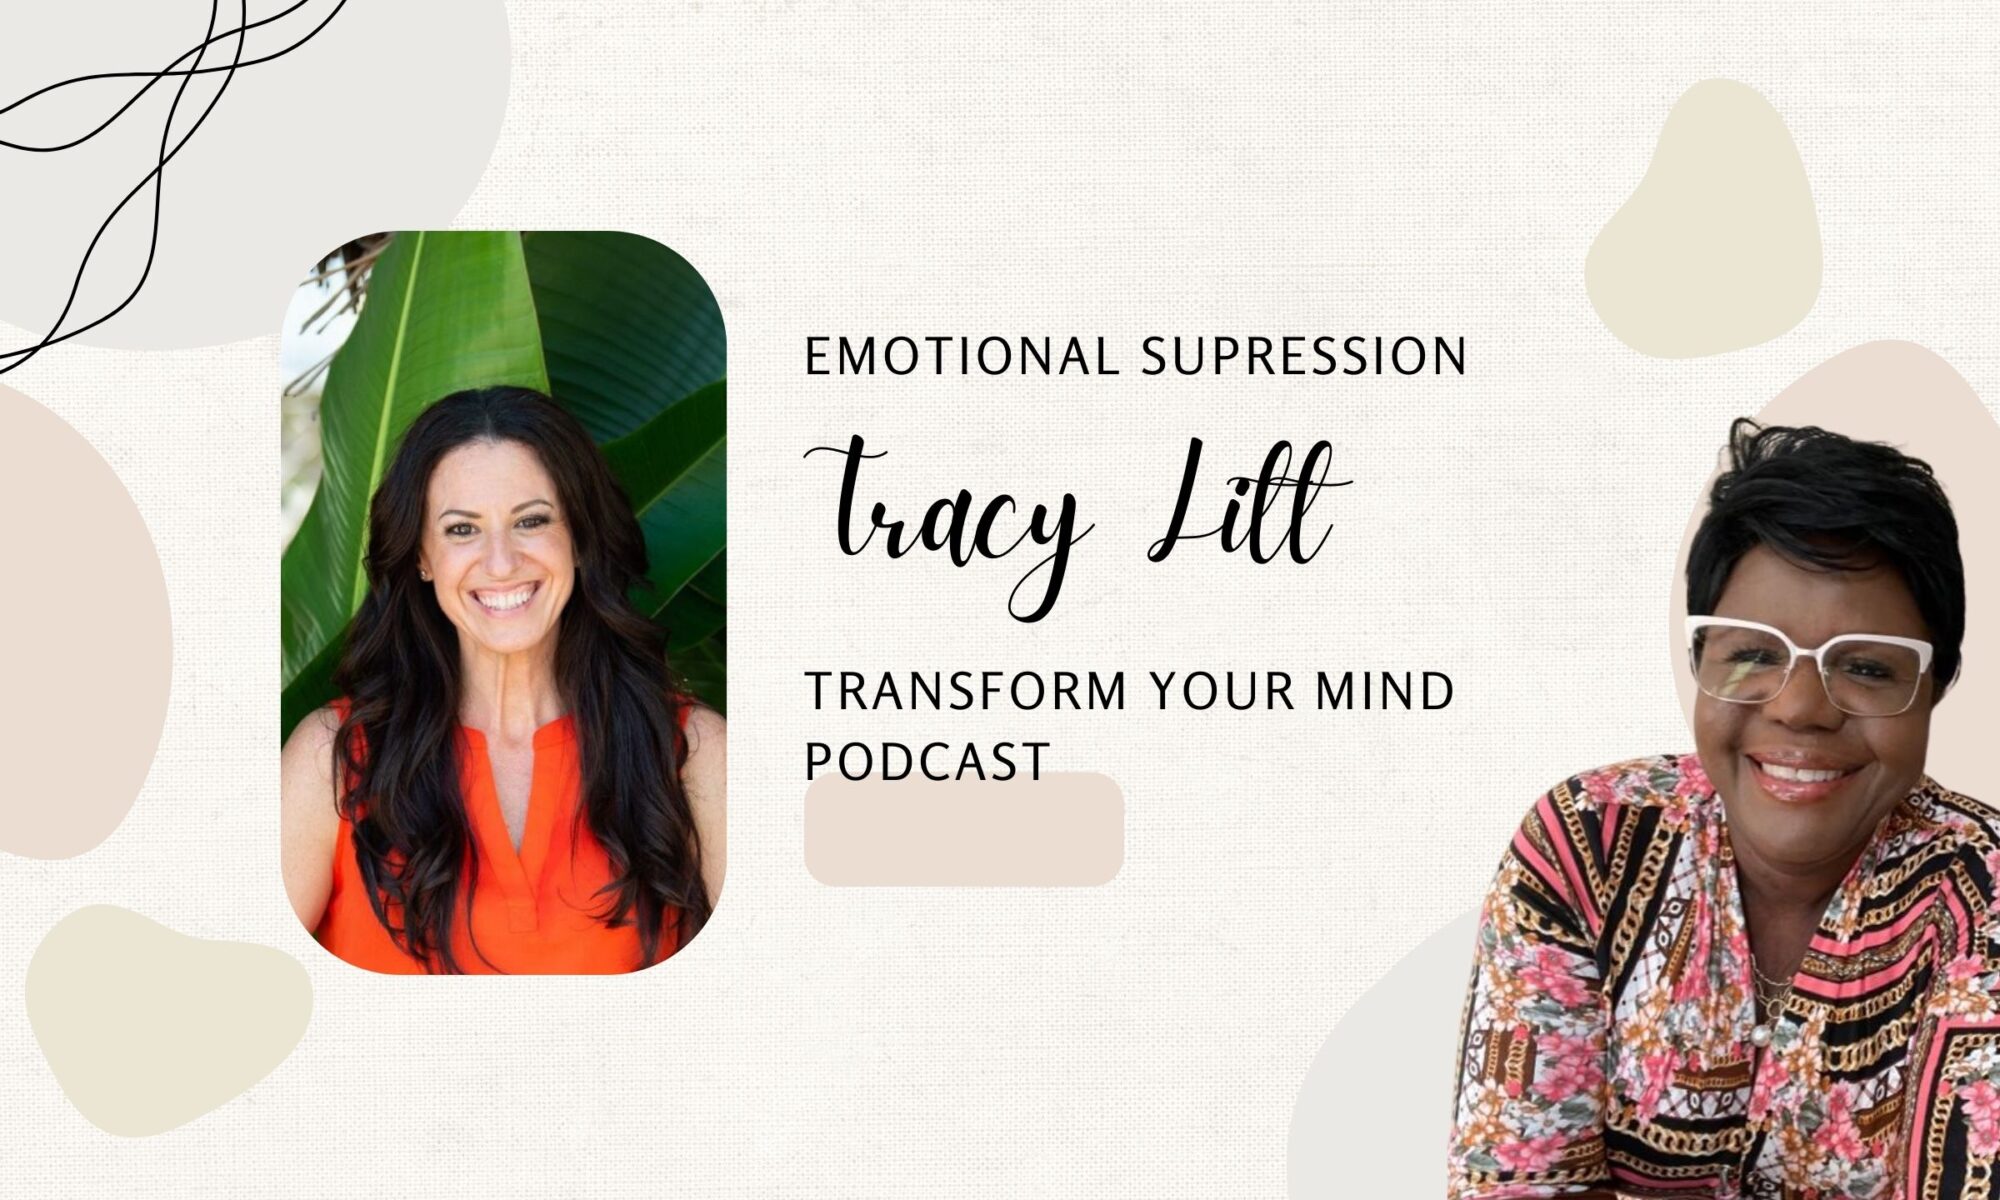 Tracy Litt Spirituality and Emotional Suppression